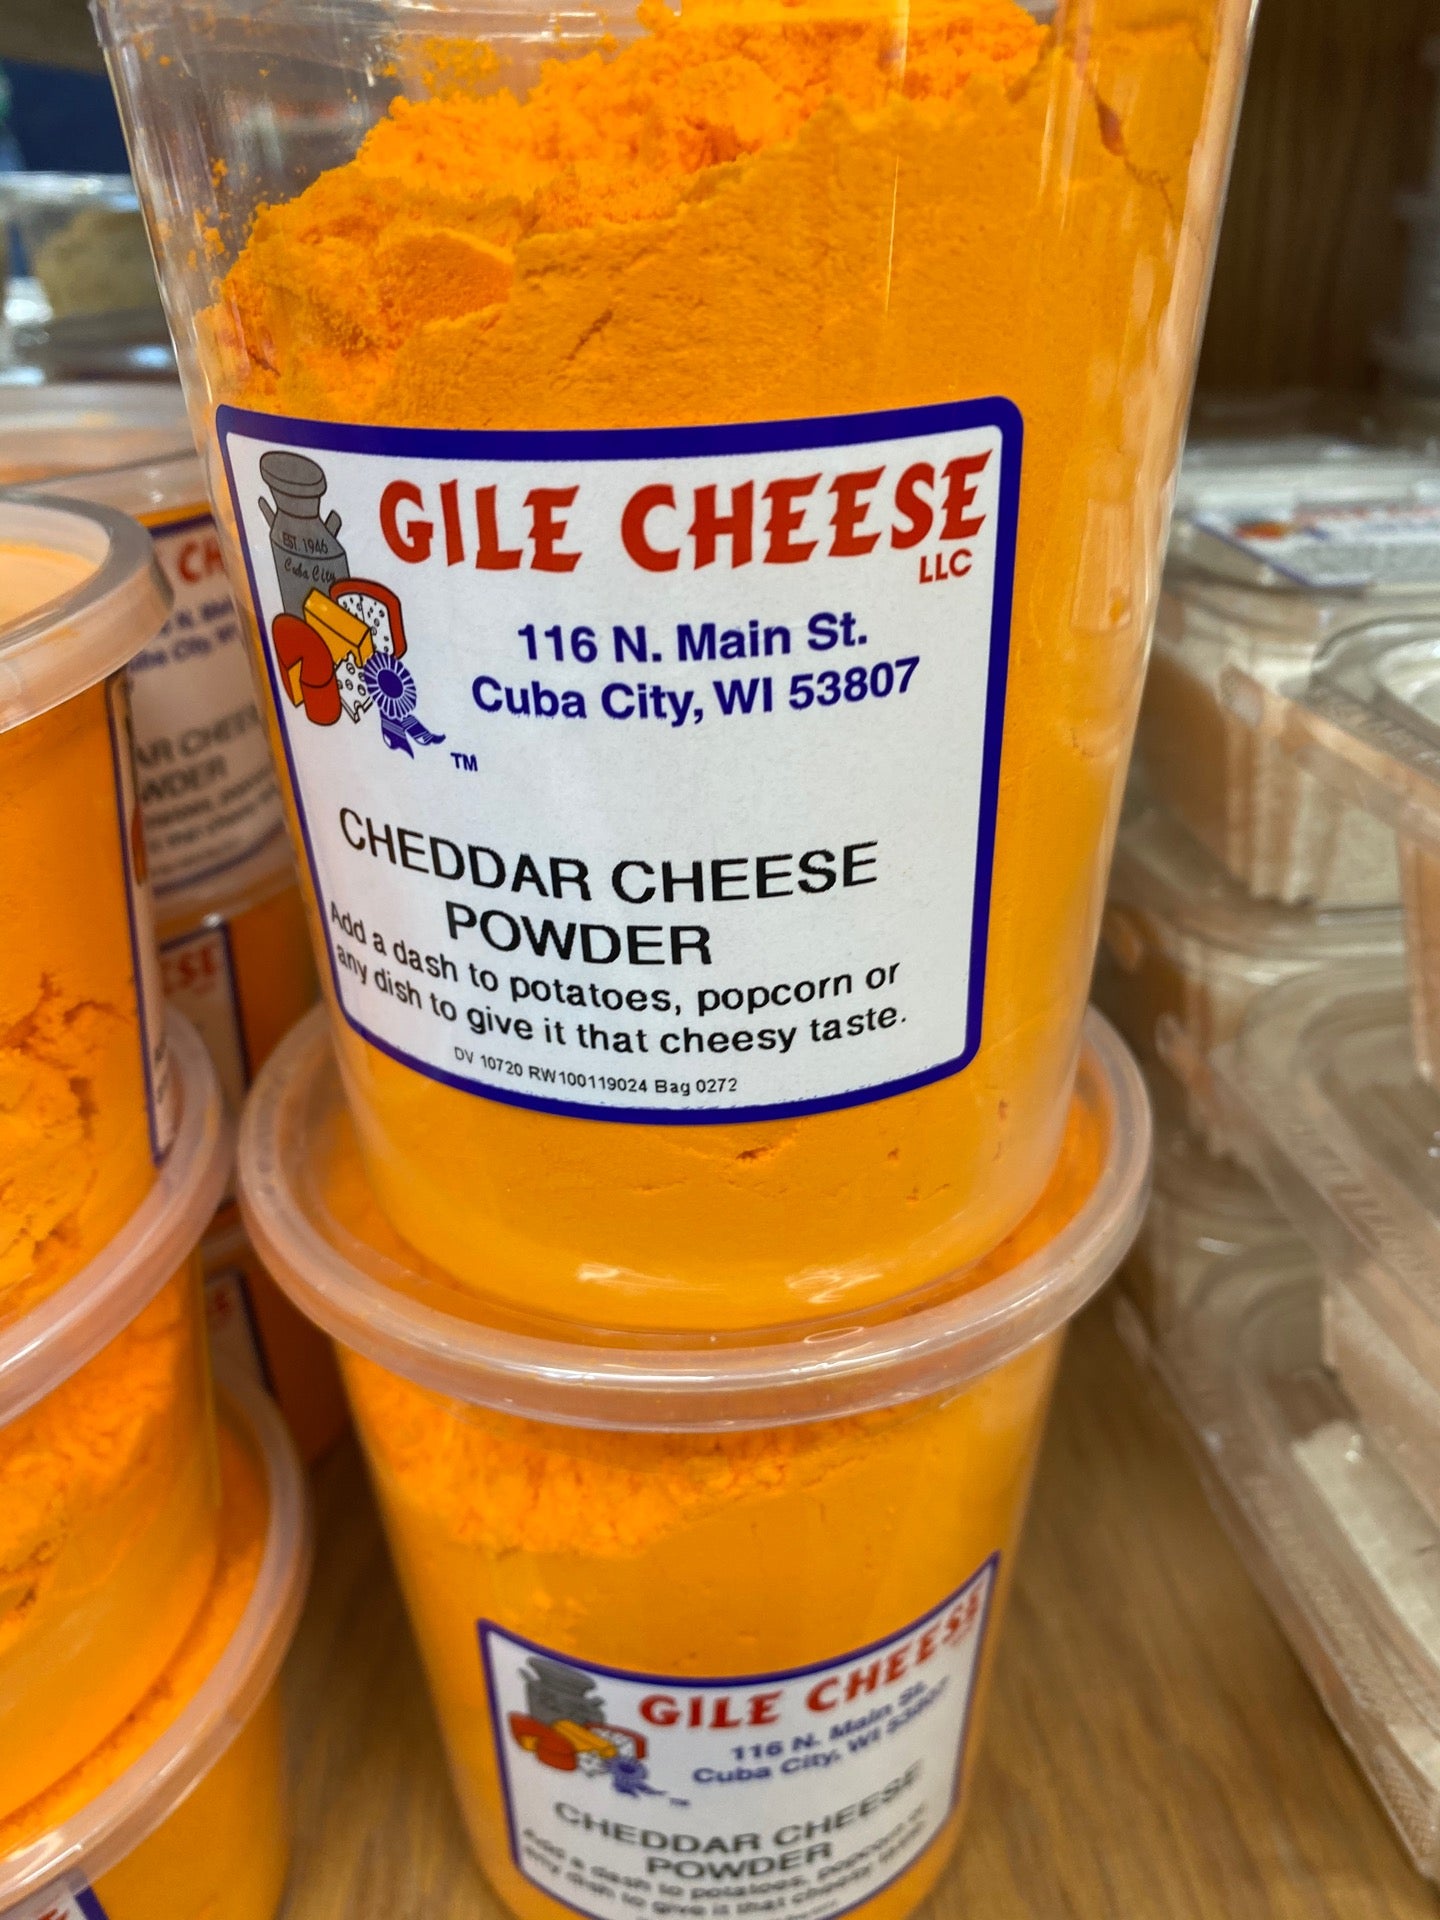 Gile cheese